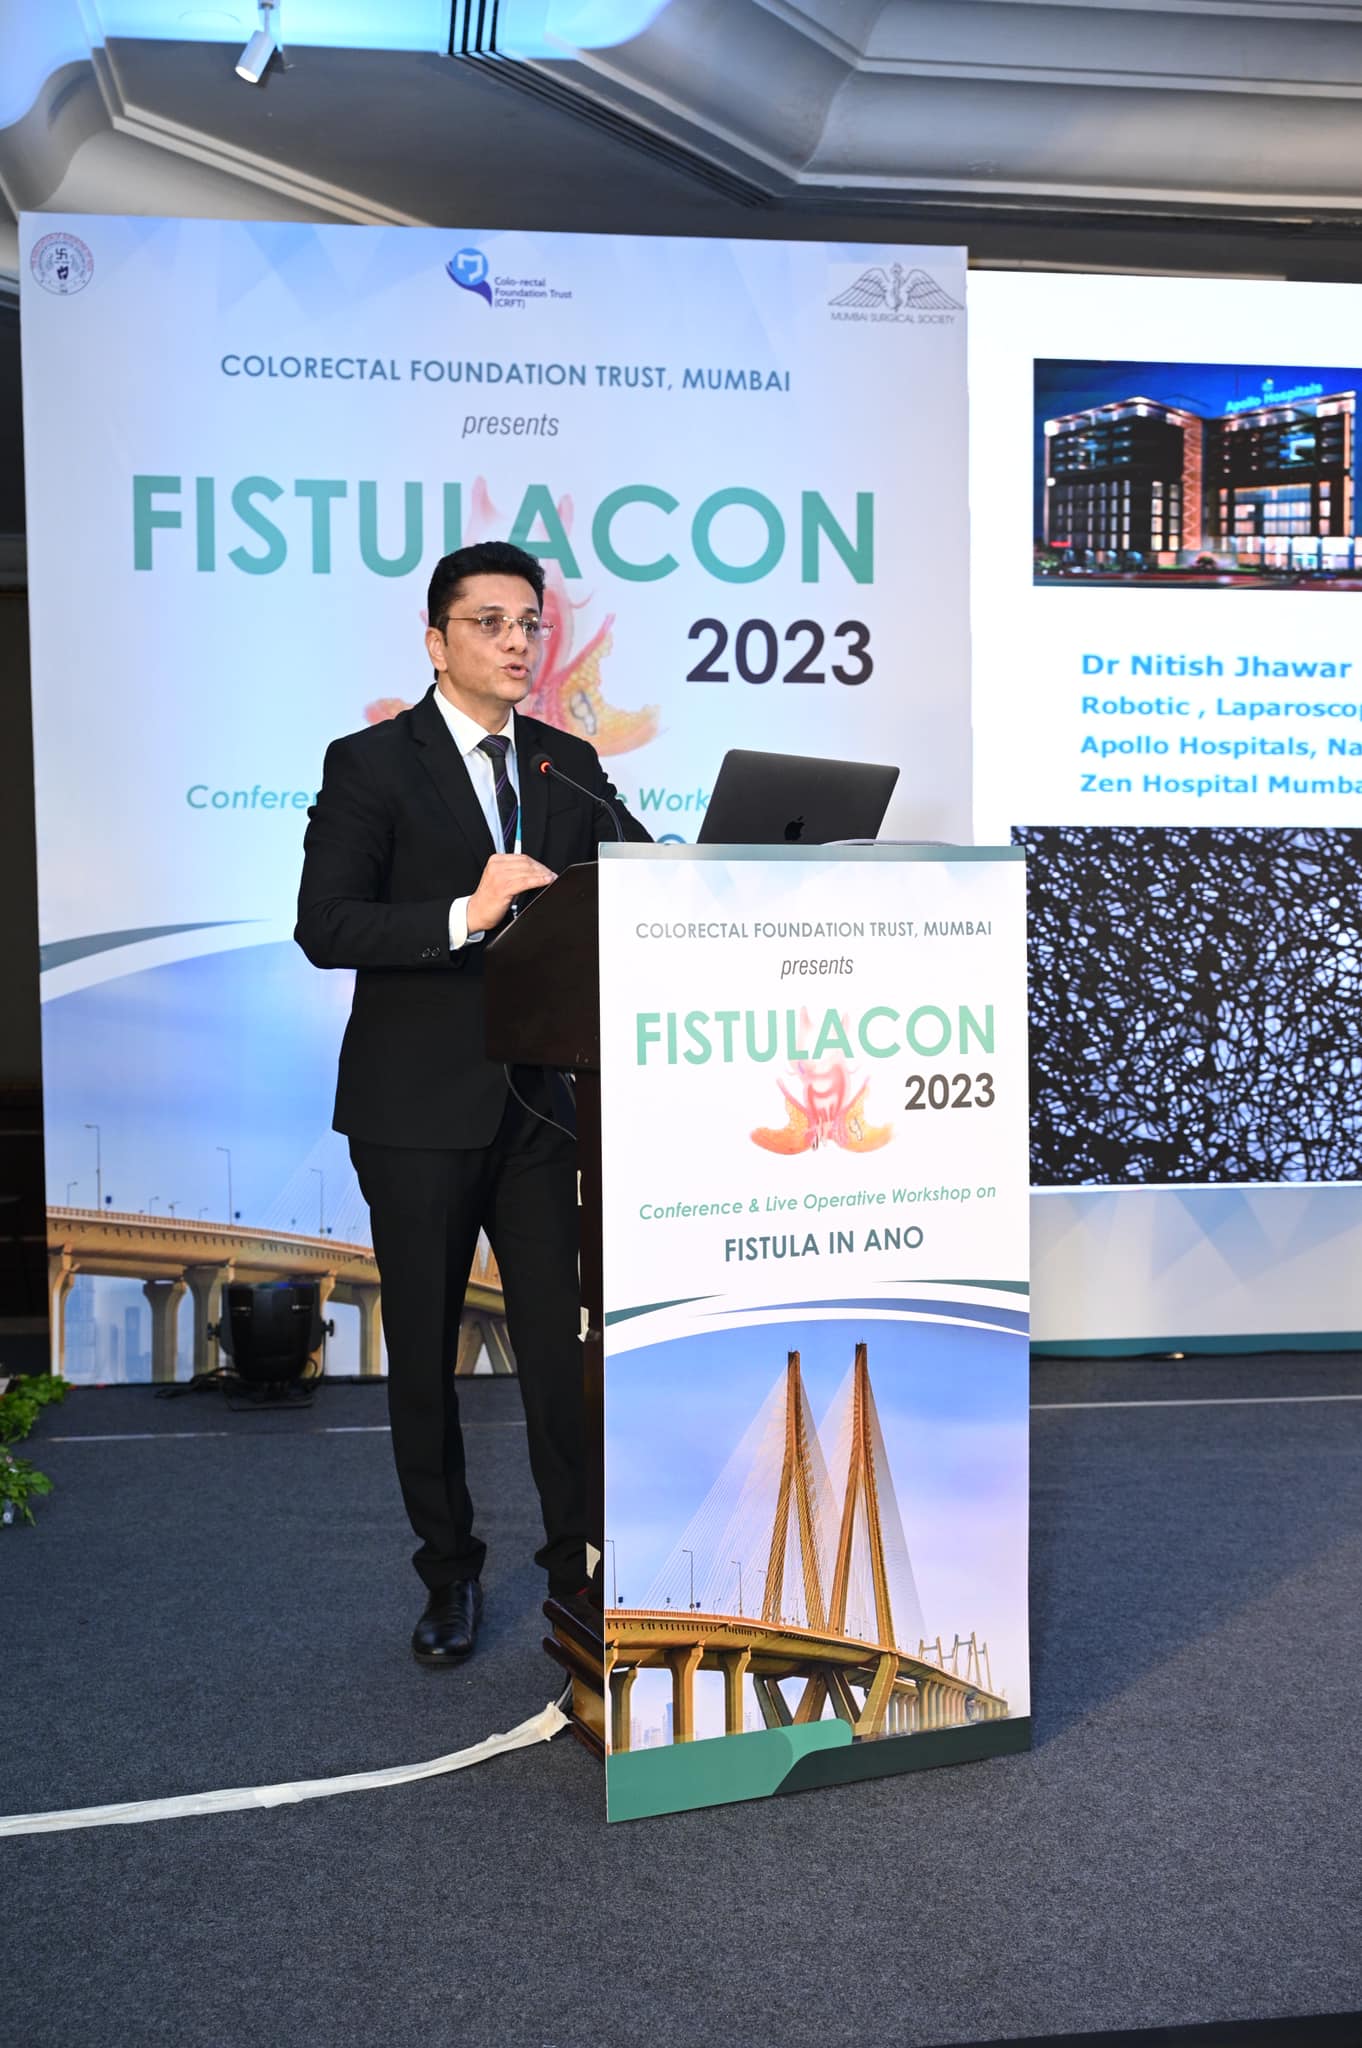 Fistulocon-fistula conference 23 Dr Nitish Jhawar